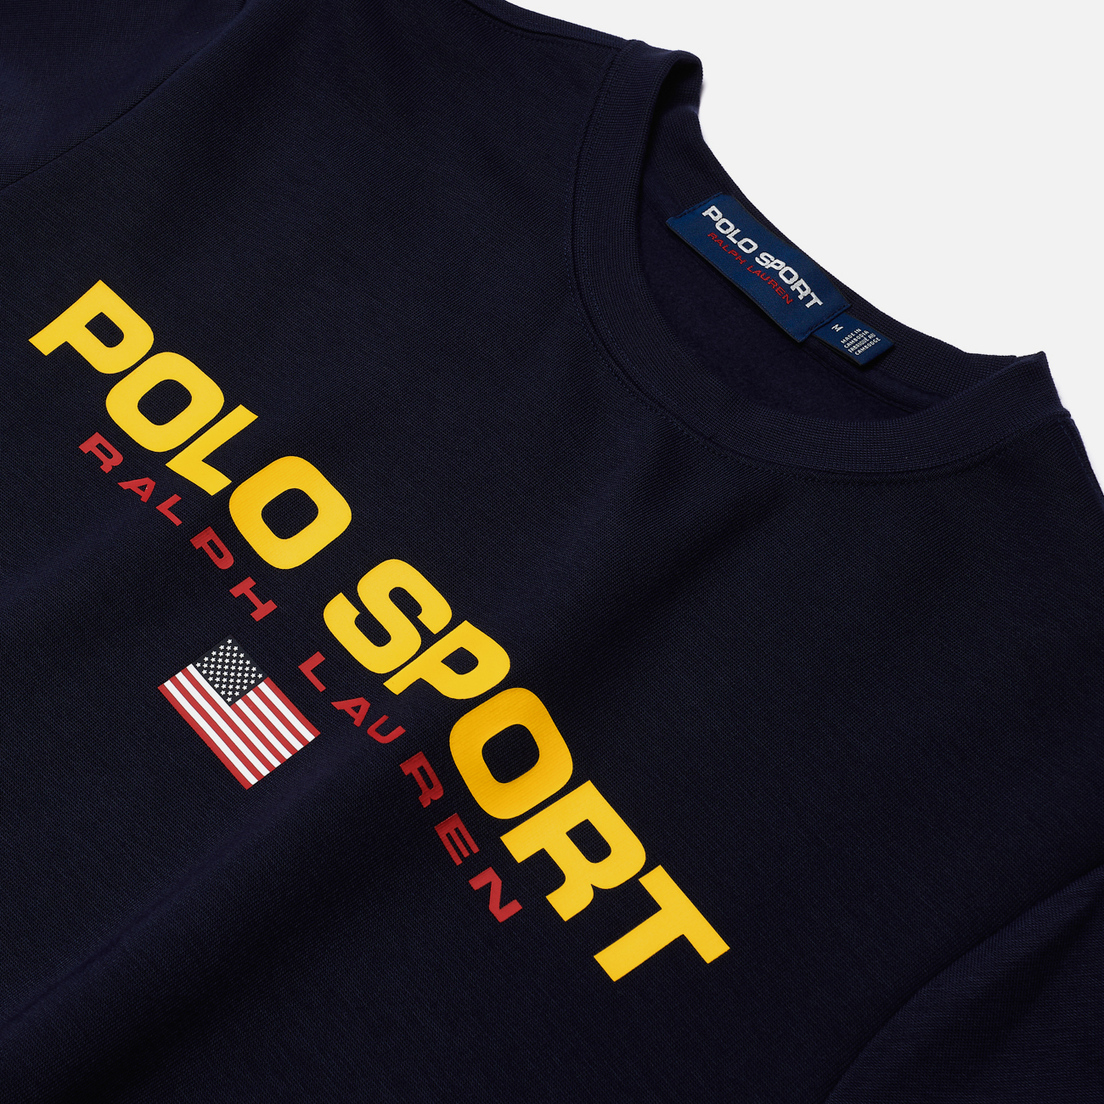 Polo Ralph Lauren Мужская толстовка Polo Sport Crew Neck Neon Fleece